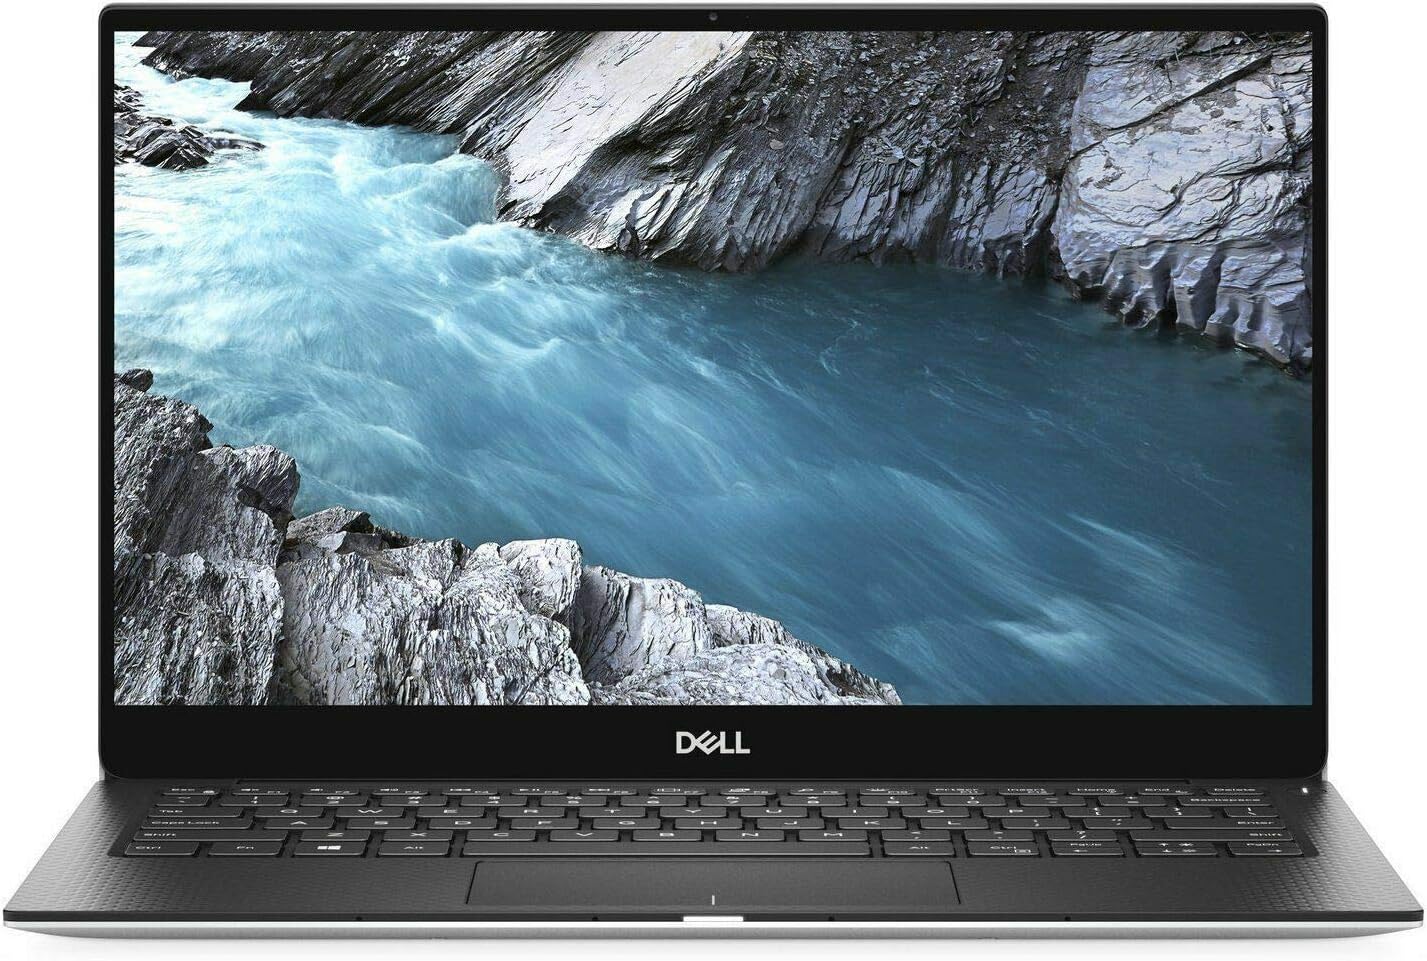 Dell XPS 9380 Laptop, 13.3" FHD (1920x1080), Intel Core i7-8565U,8th Gen ,16GB RAM, 512 GB PCIe SSD, Windows 10 Home